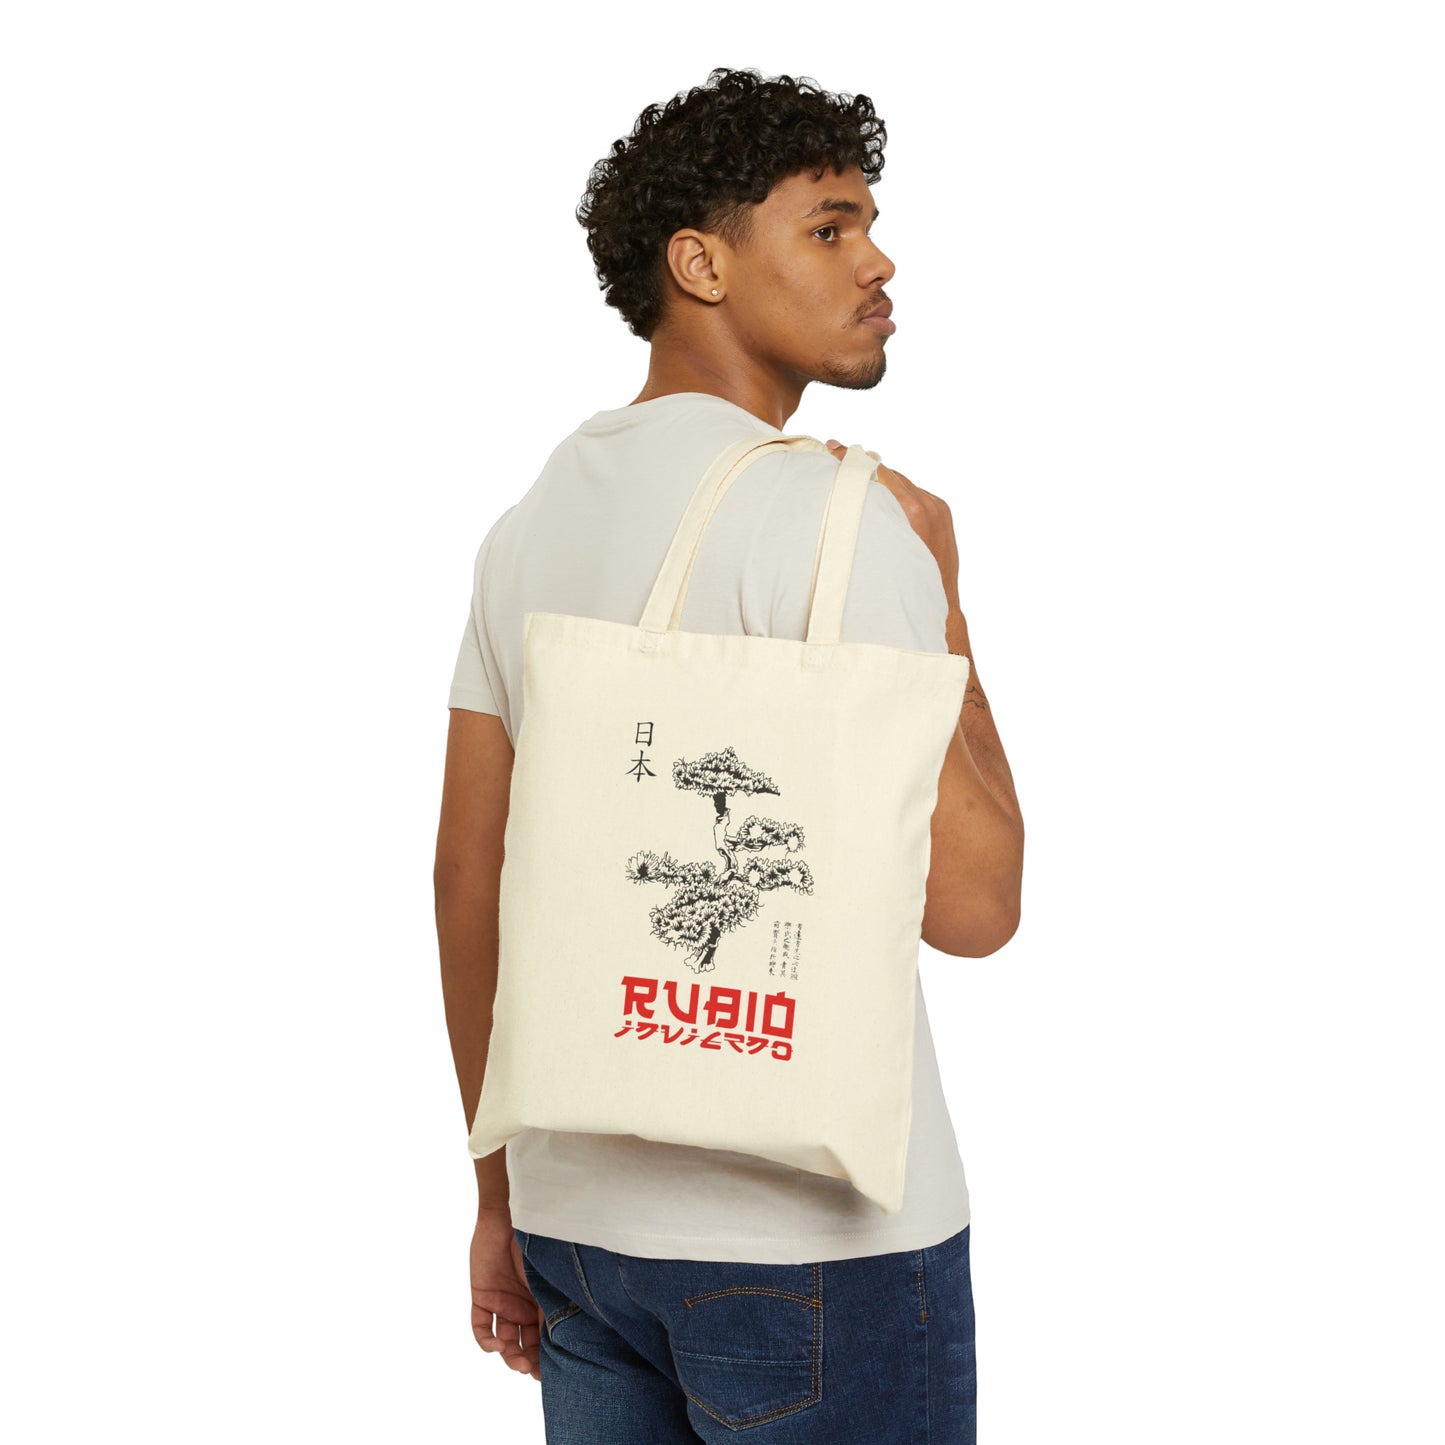 Rubio Invierno/Black Cotton Canvas Tote Bag